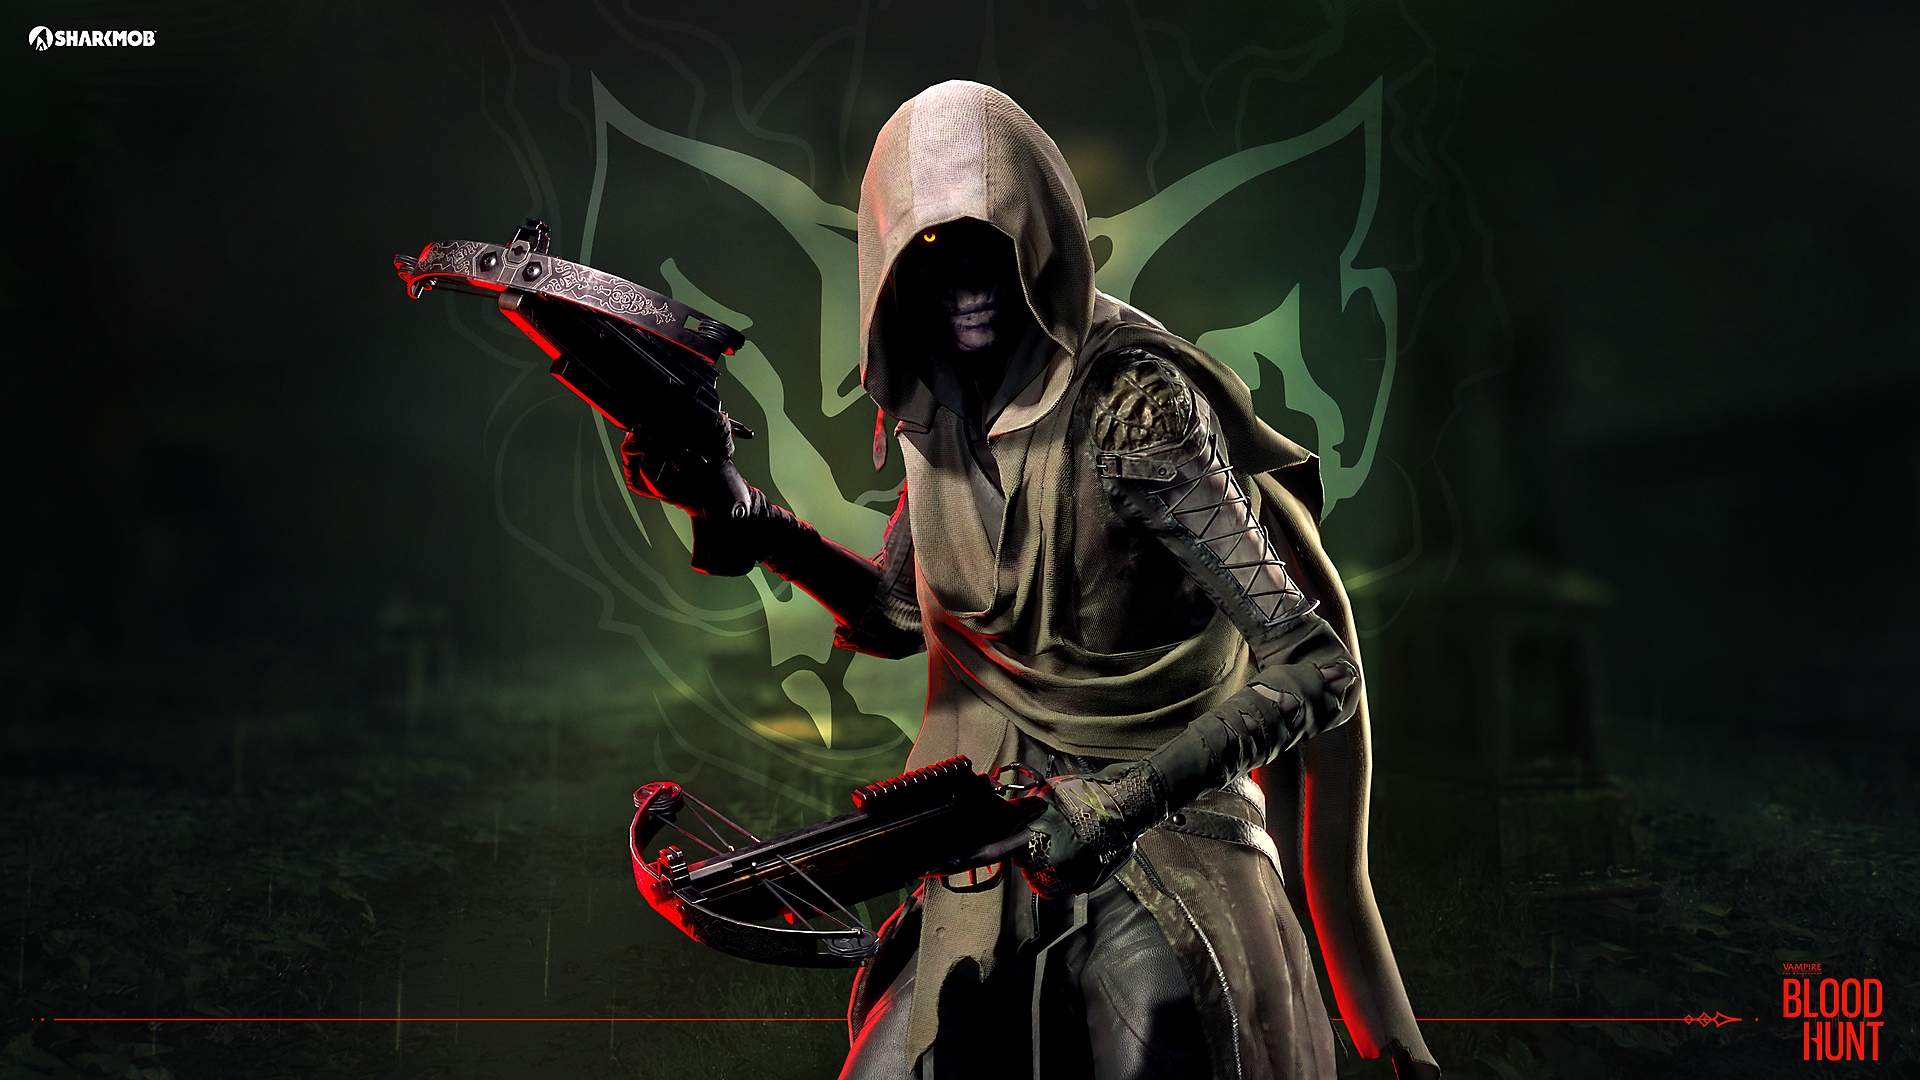 Vampire the Masquerade – Bloodhunt – Архетип – изображение персонажа – Проходимец